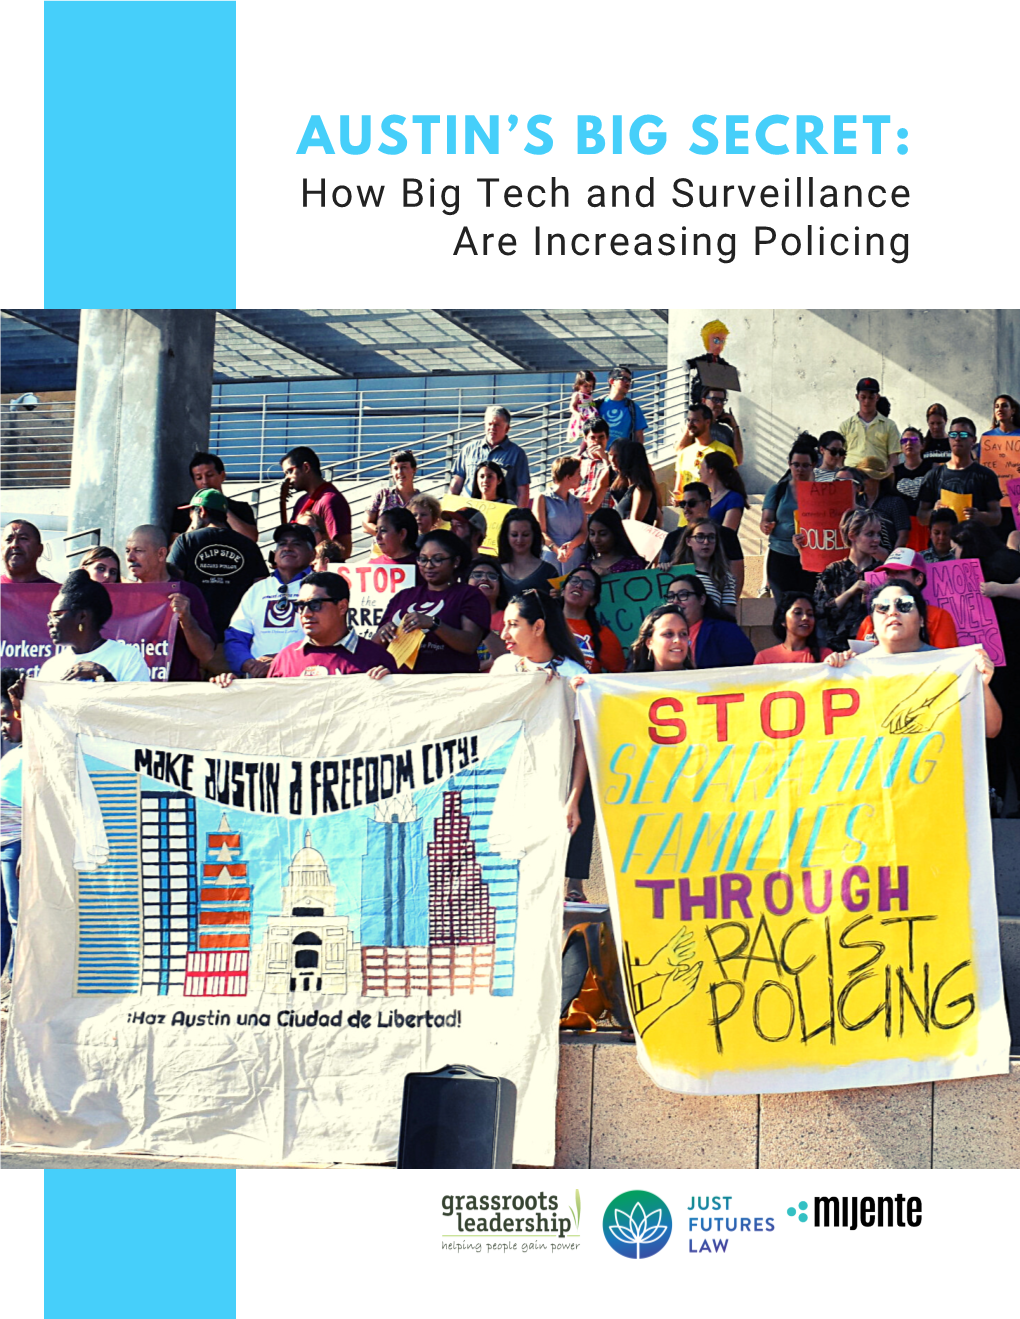 Austin's Big Secret: How Big Tech and Surveillance Are Increasing